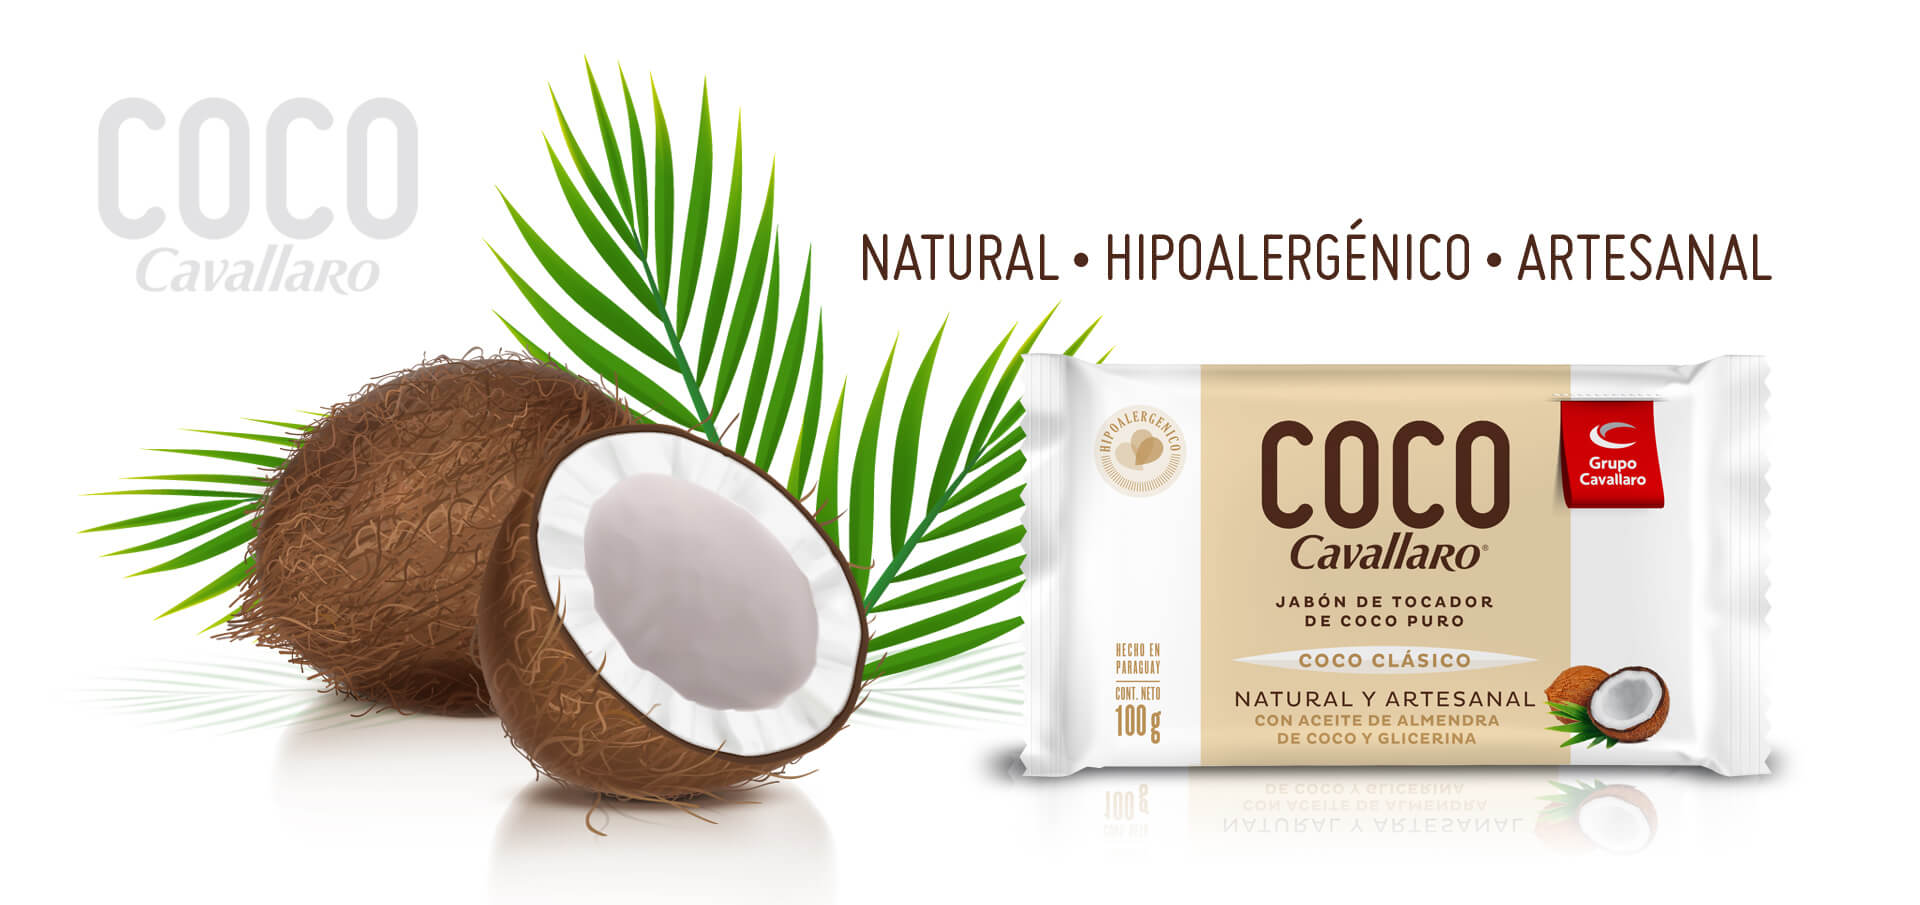 jabon aceite de coco puro vegano artesanal natural hipoalergenico antiacne limpieza profunda shampoo solido